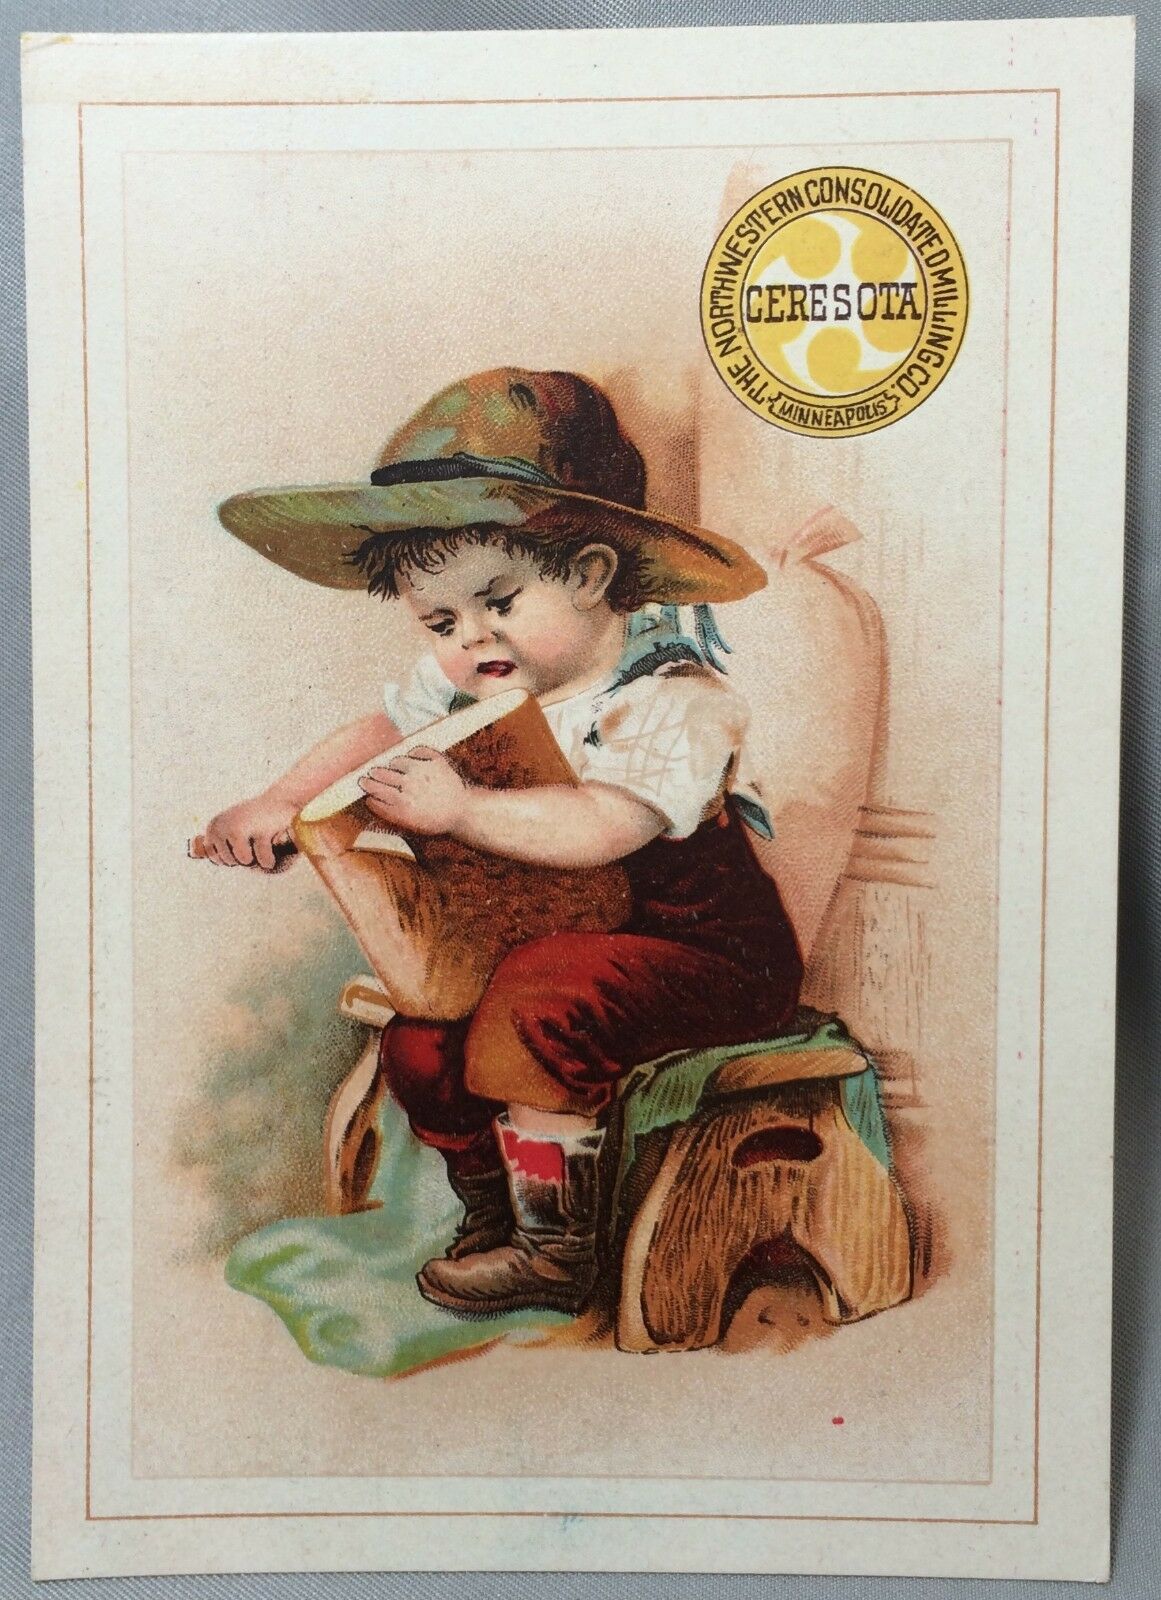 1904 Nw Milling Ceresota Flour Victorian Advertising Trade Card Minneapolis Minn